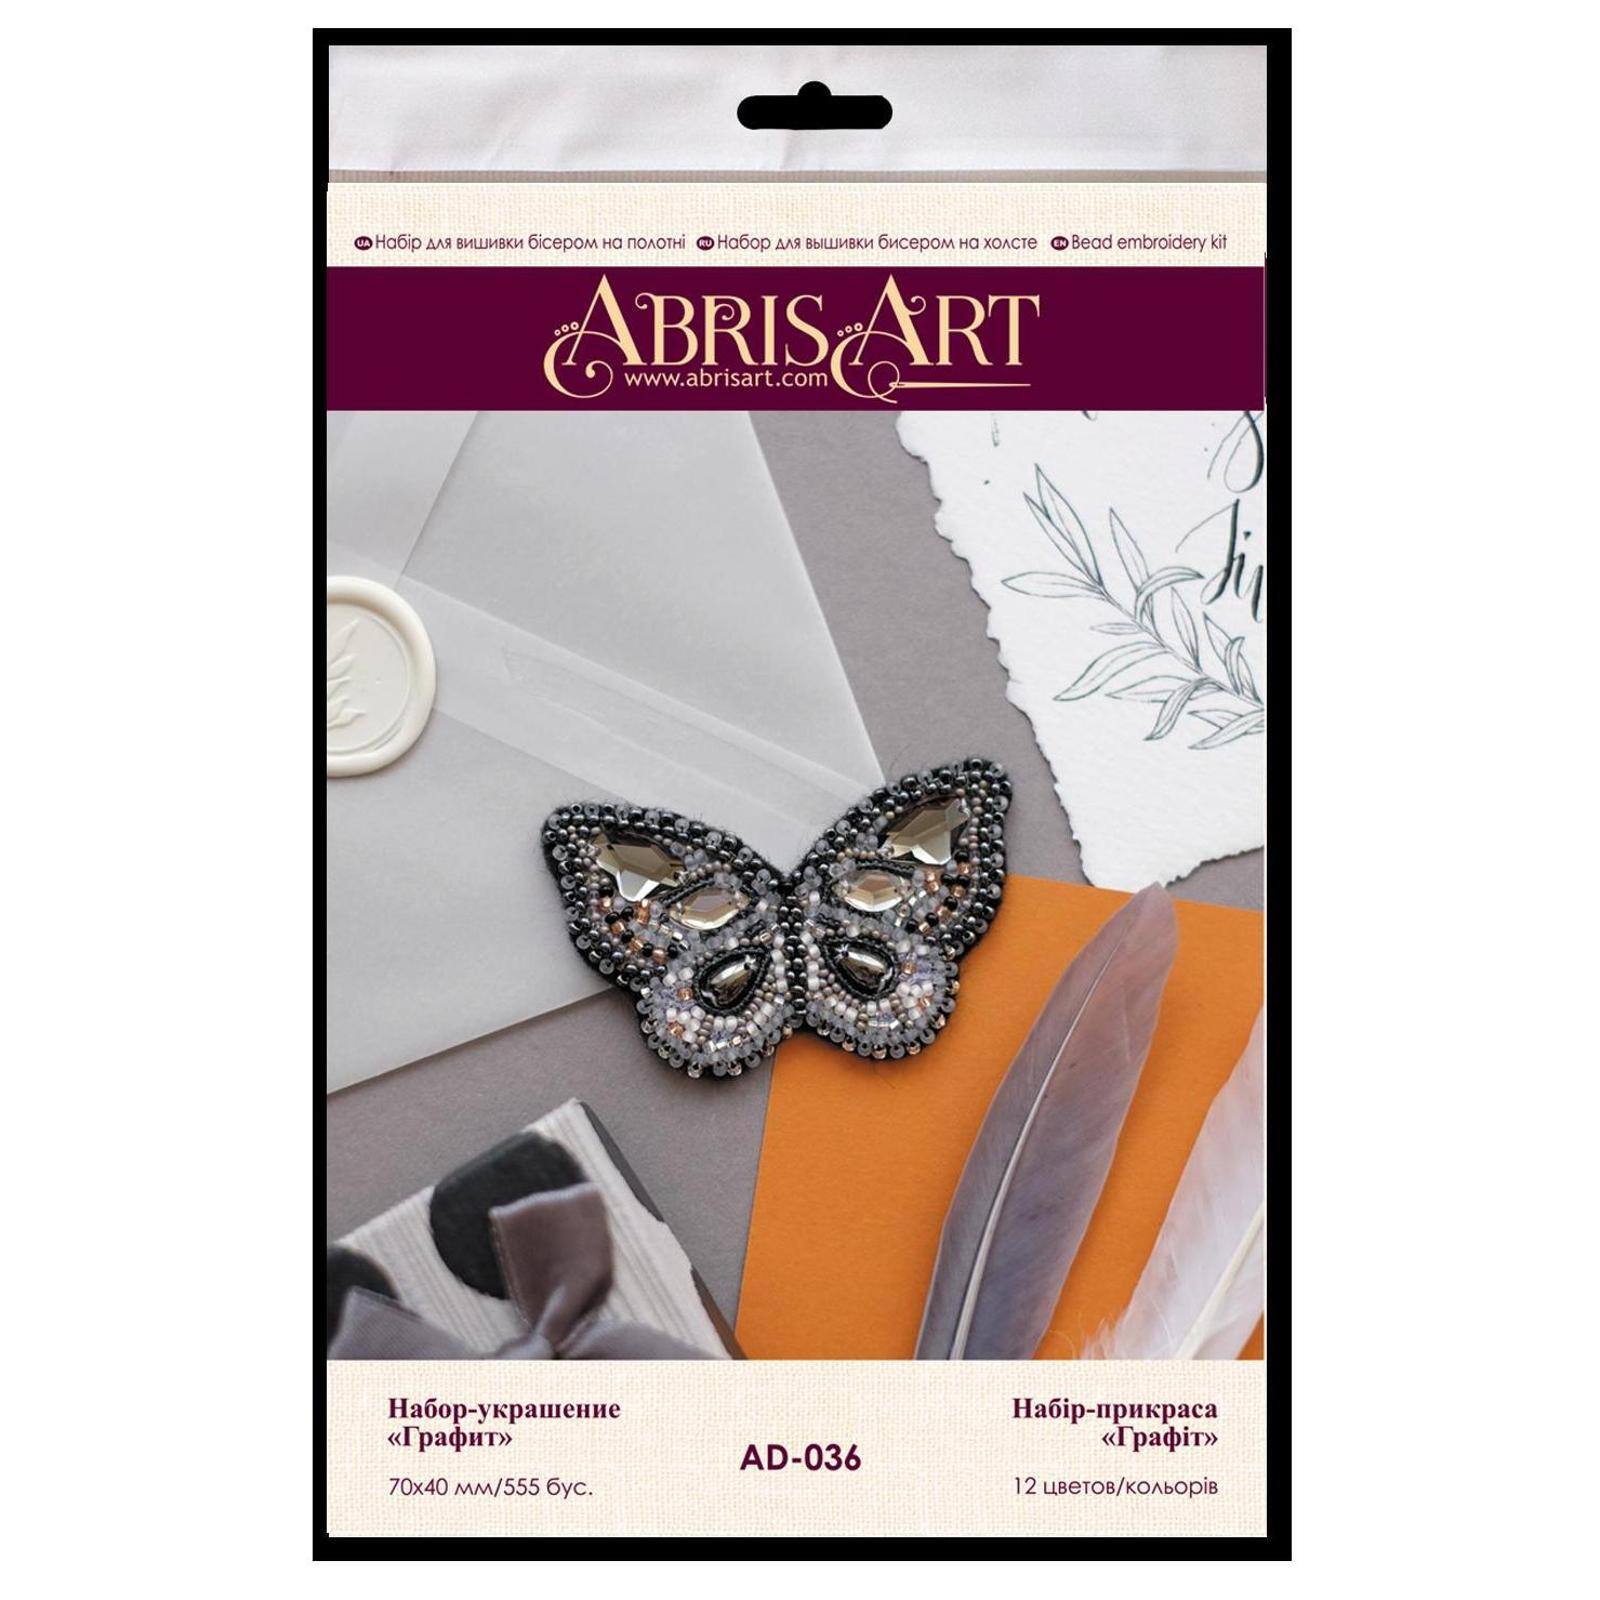 Abris Art Graphite Decoration Kit